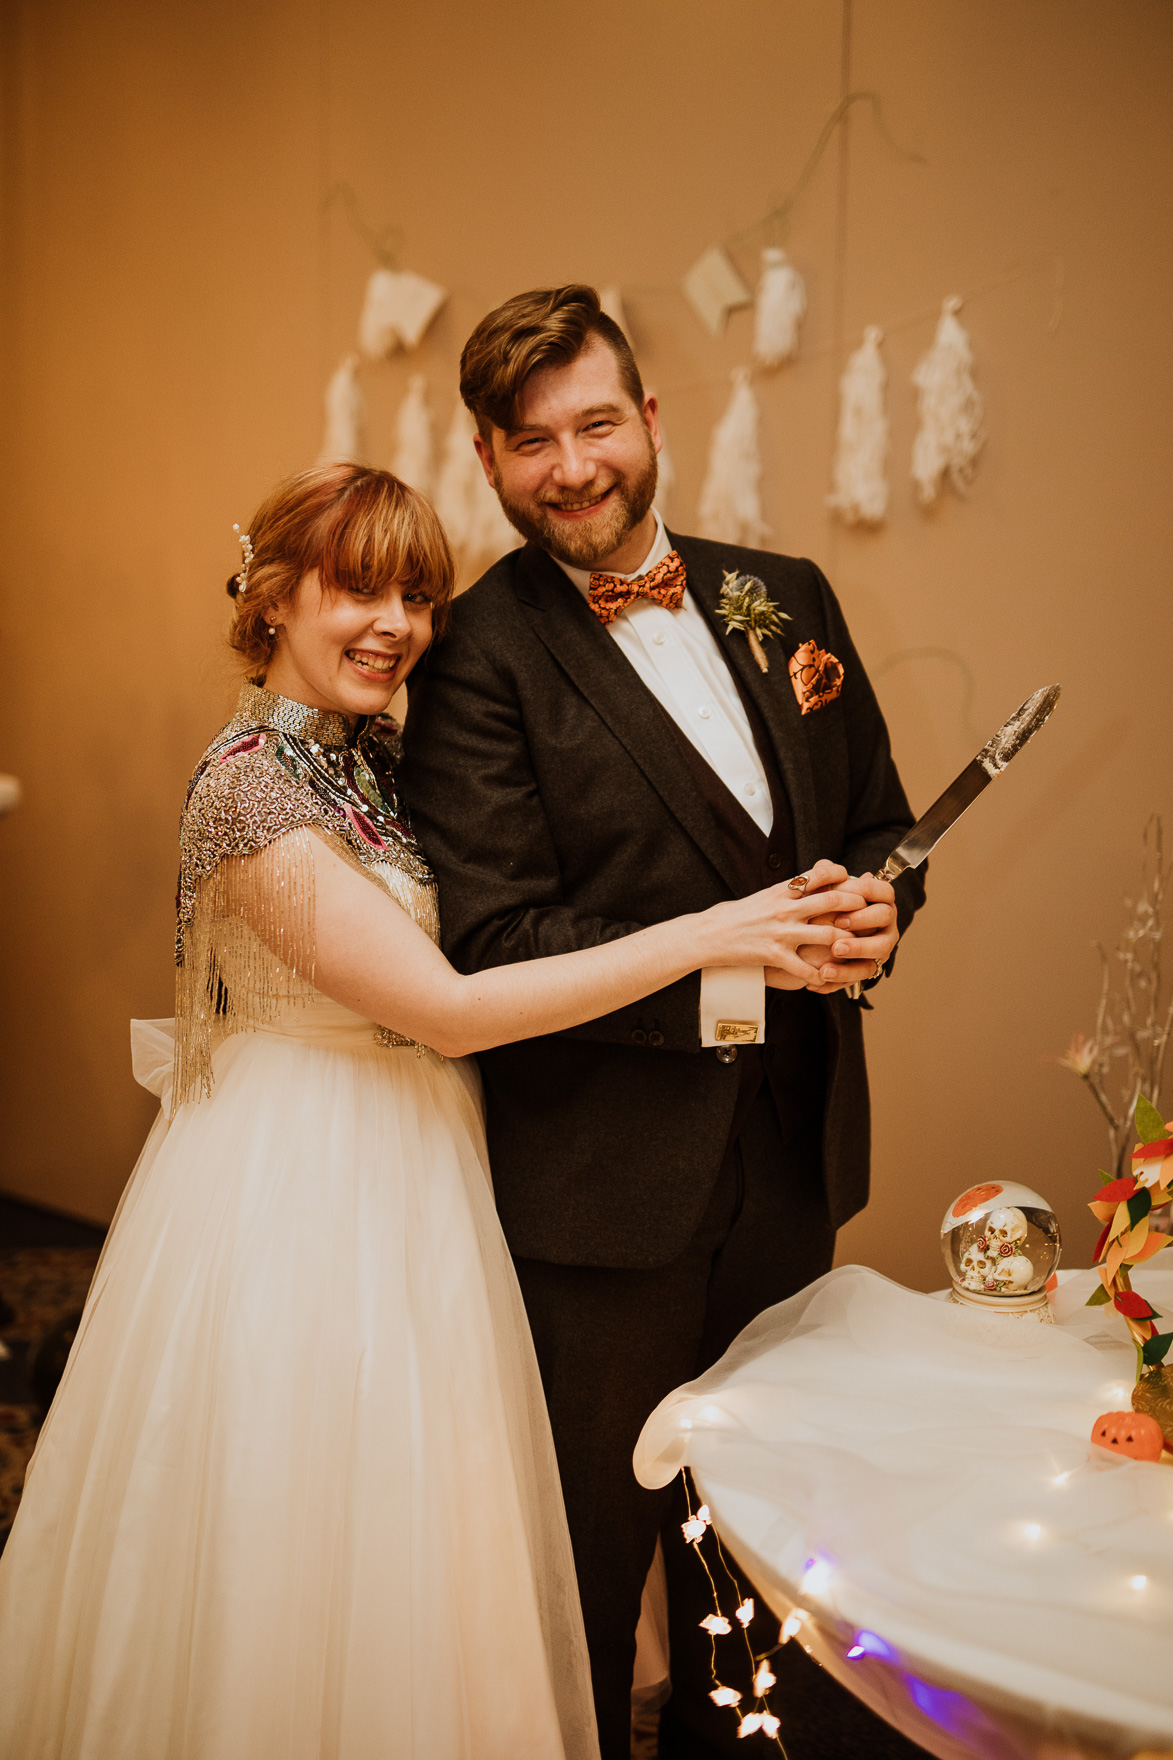 A man and woman cutting a wedding cake